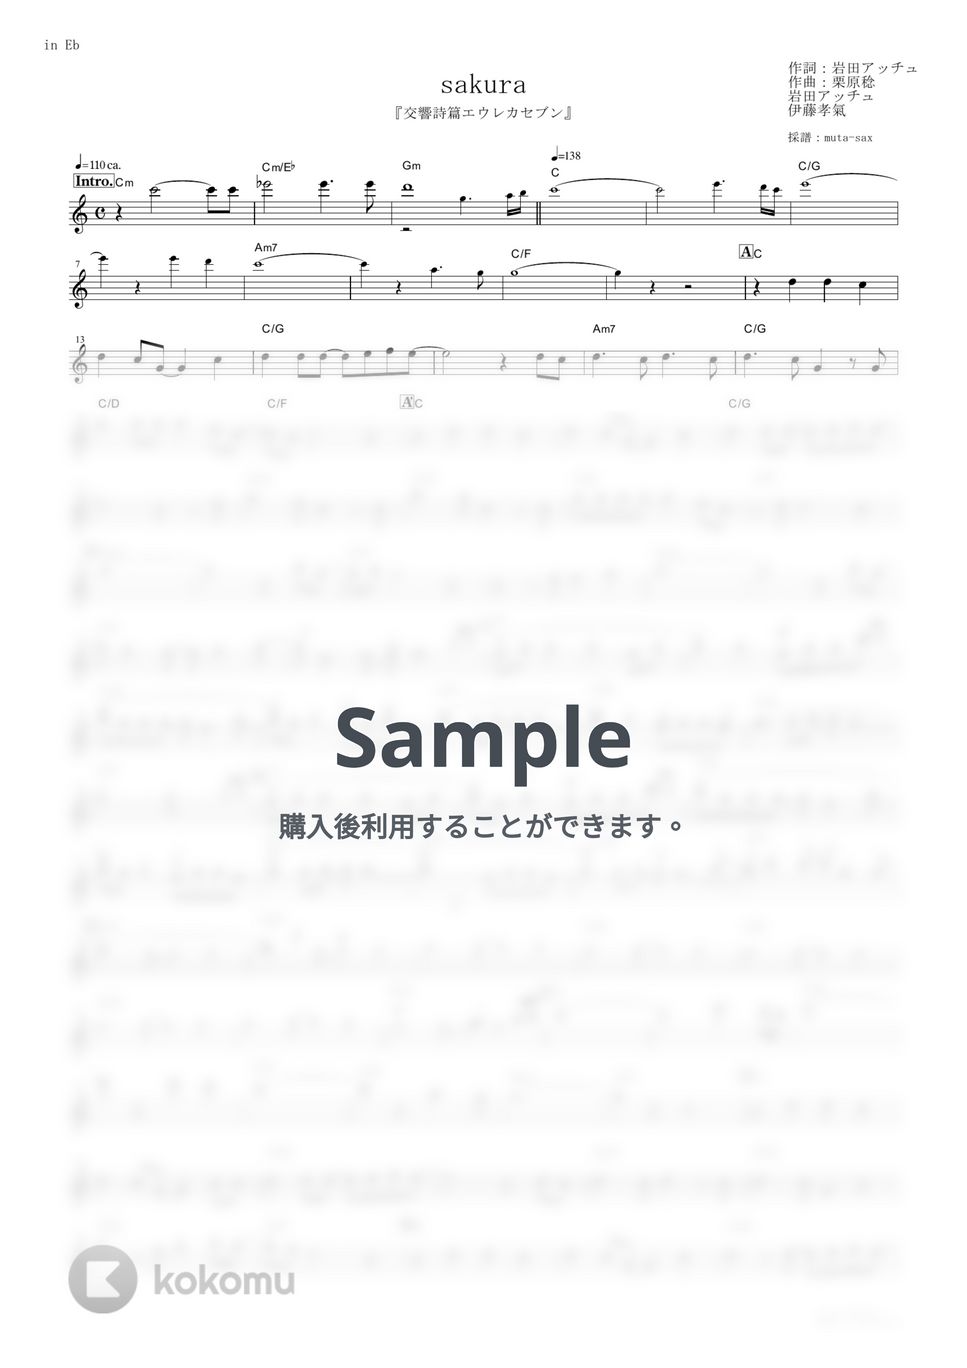 NIRGILIS - sakura (『交響詩篇エウレカセブン』 / in Eb) by muta-sax